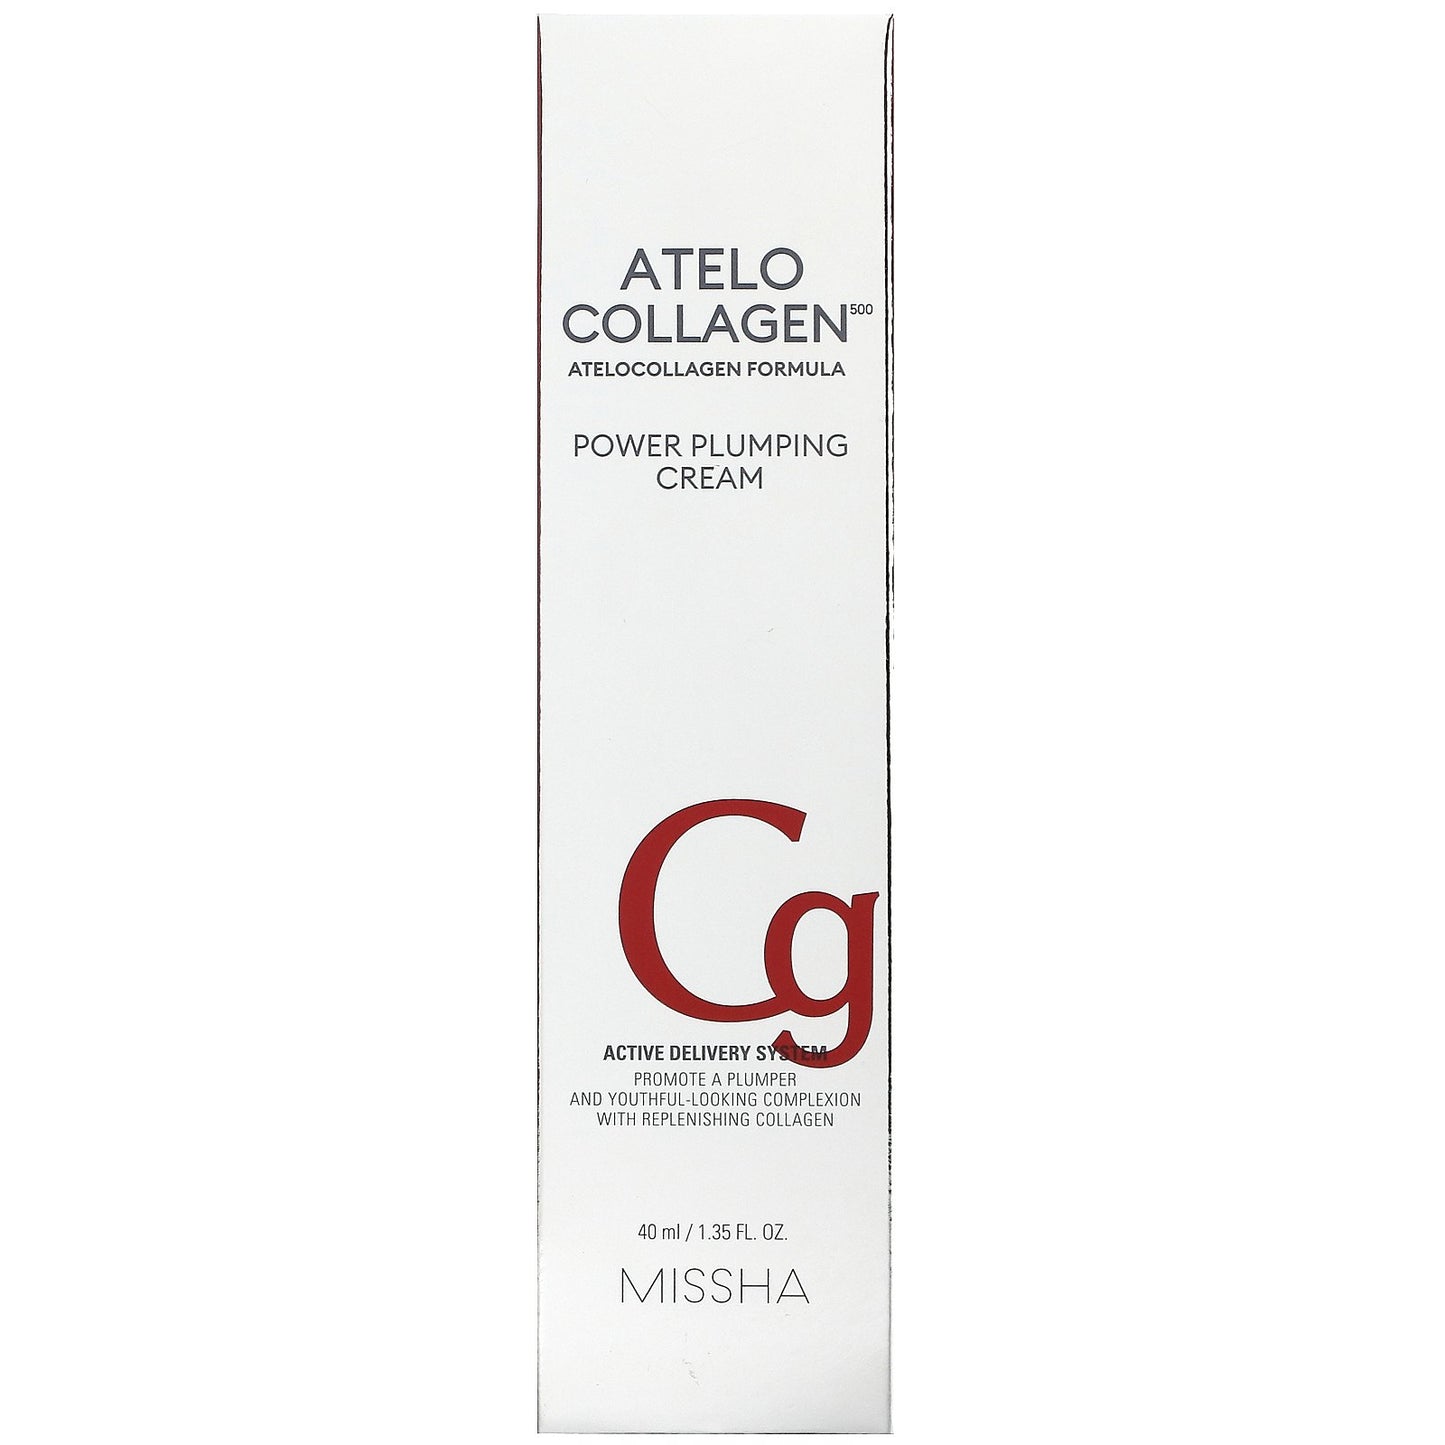 MISSHA - Atelo Collagen Power Plumping Cream 40ml